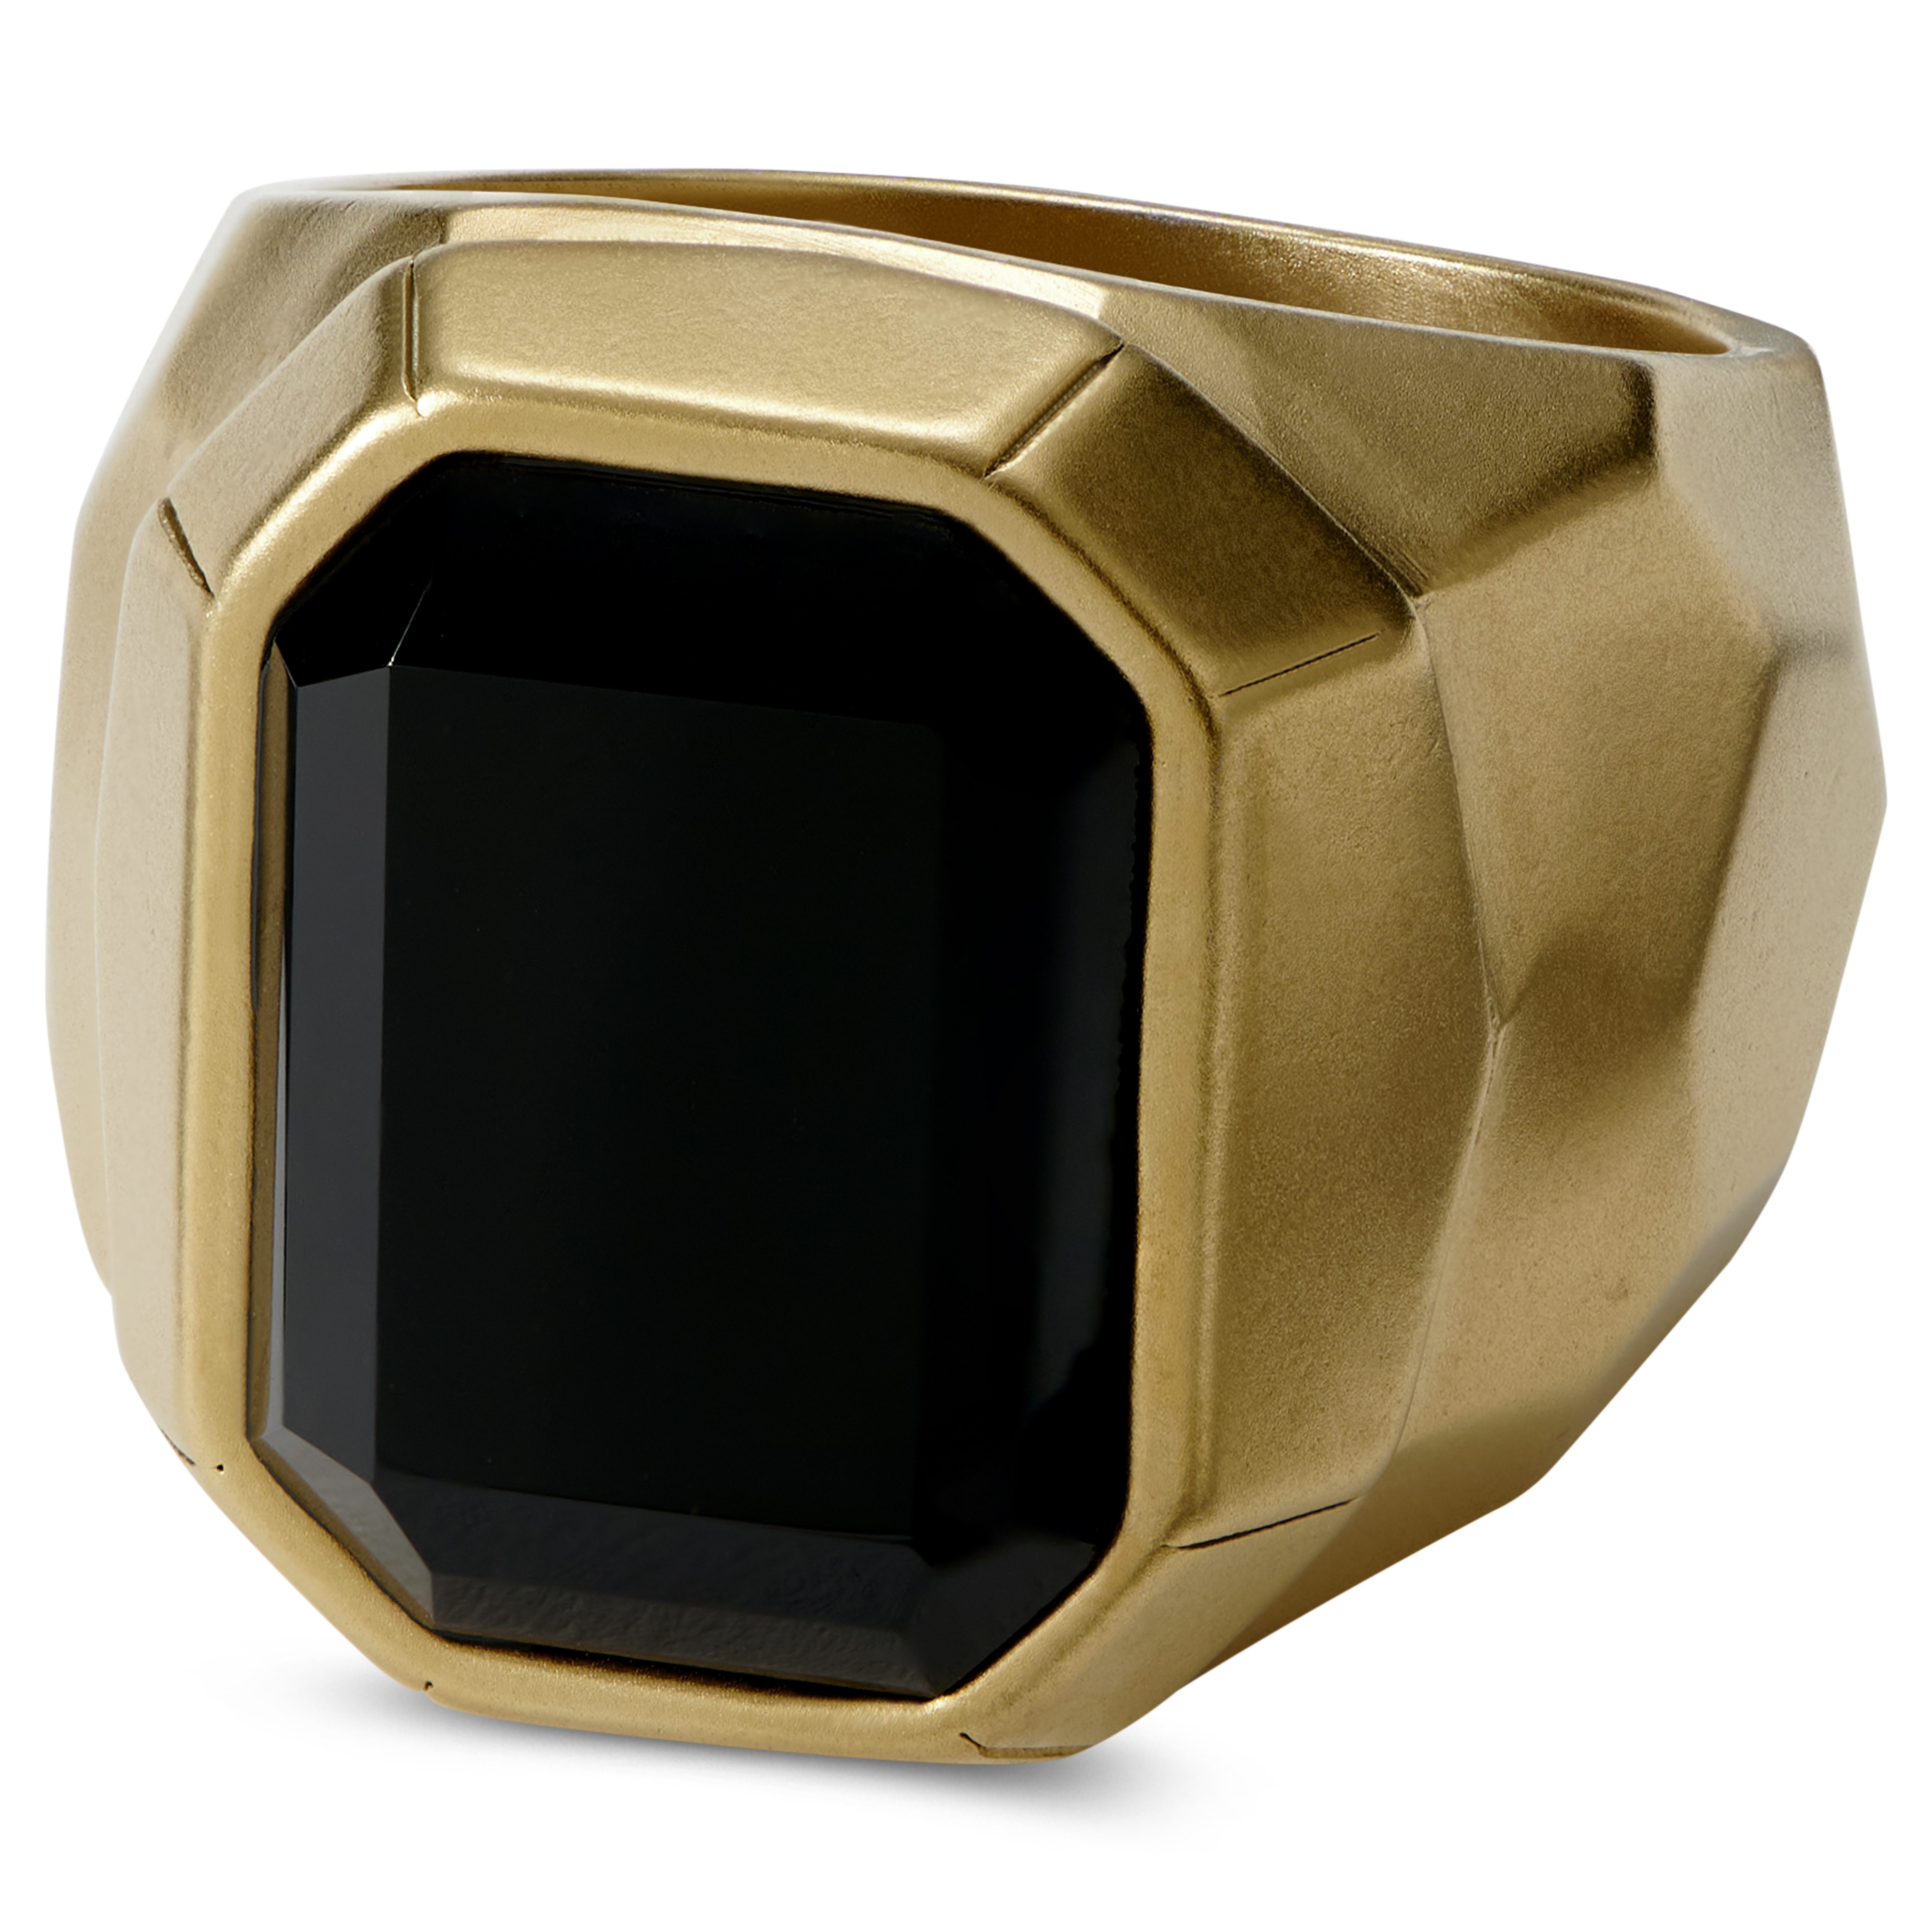 Blue Stone With Diamond Sophisticated Design Gold Plated Ring For Men -  Style A832, सोने का पानी चढ़ी हुई अंगूठी - Soni Fashion, Rajkot | ID:  2849244102197